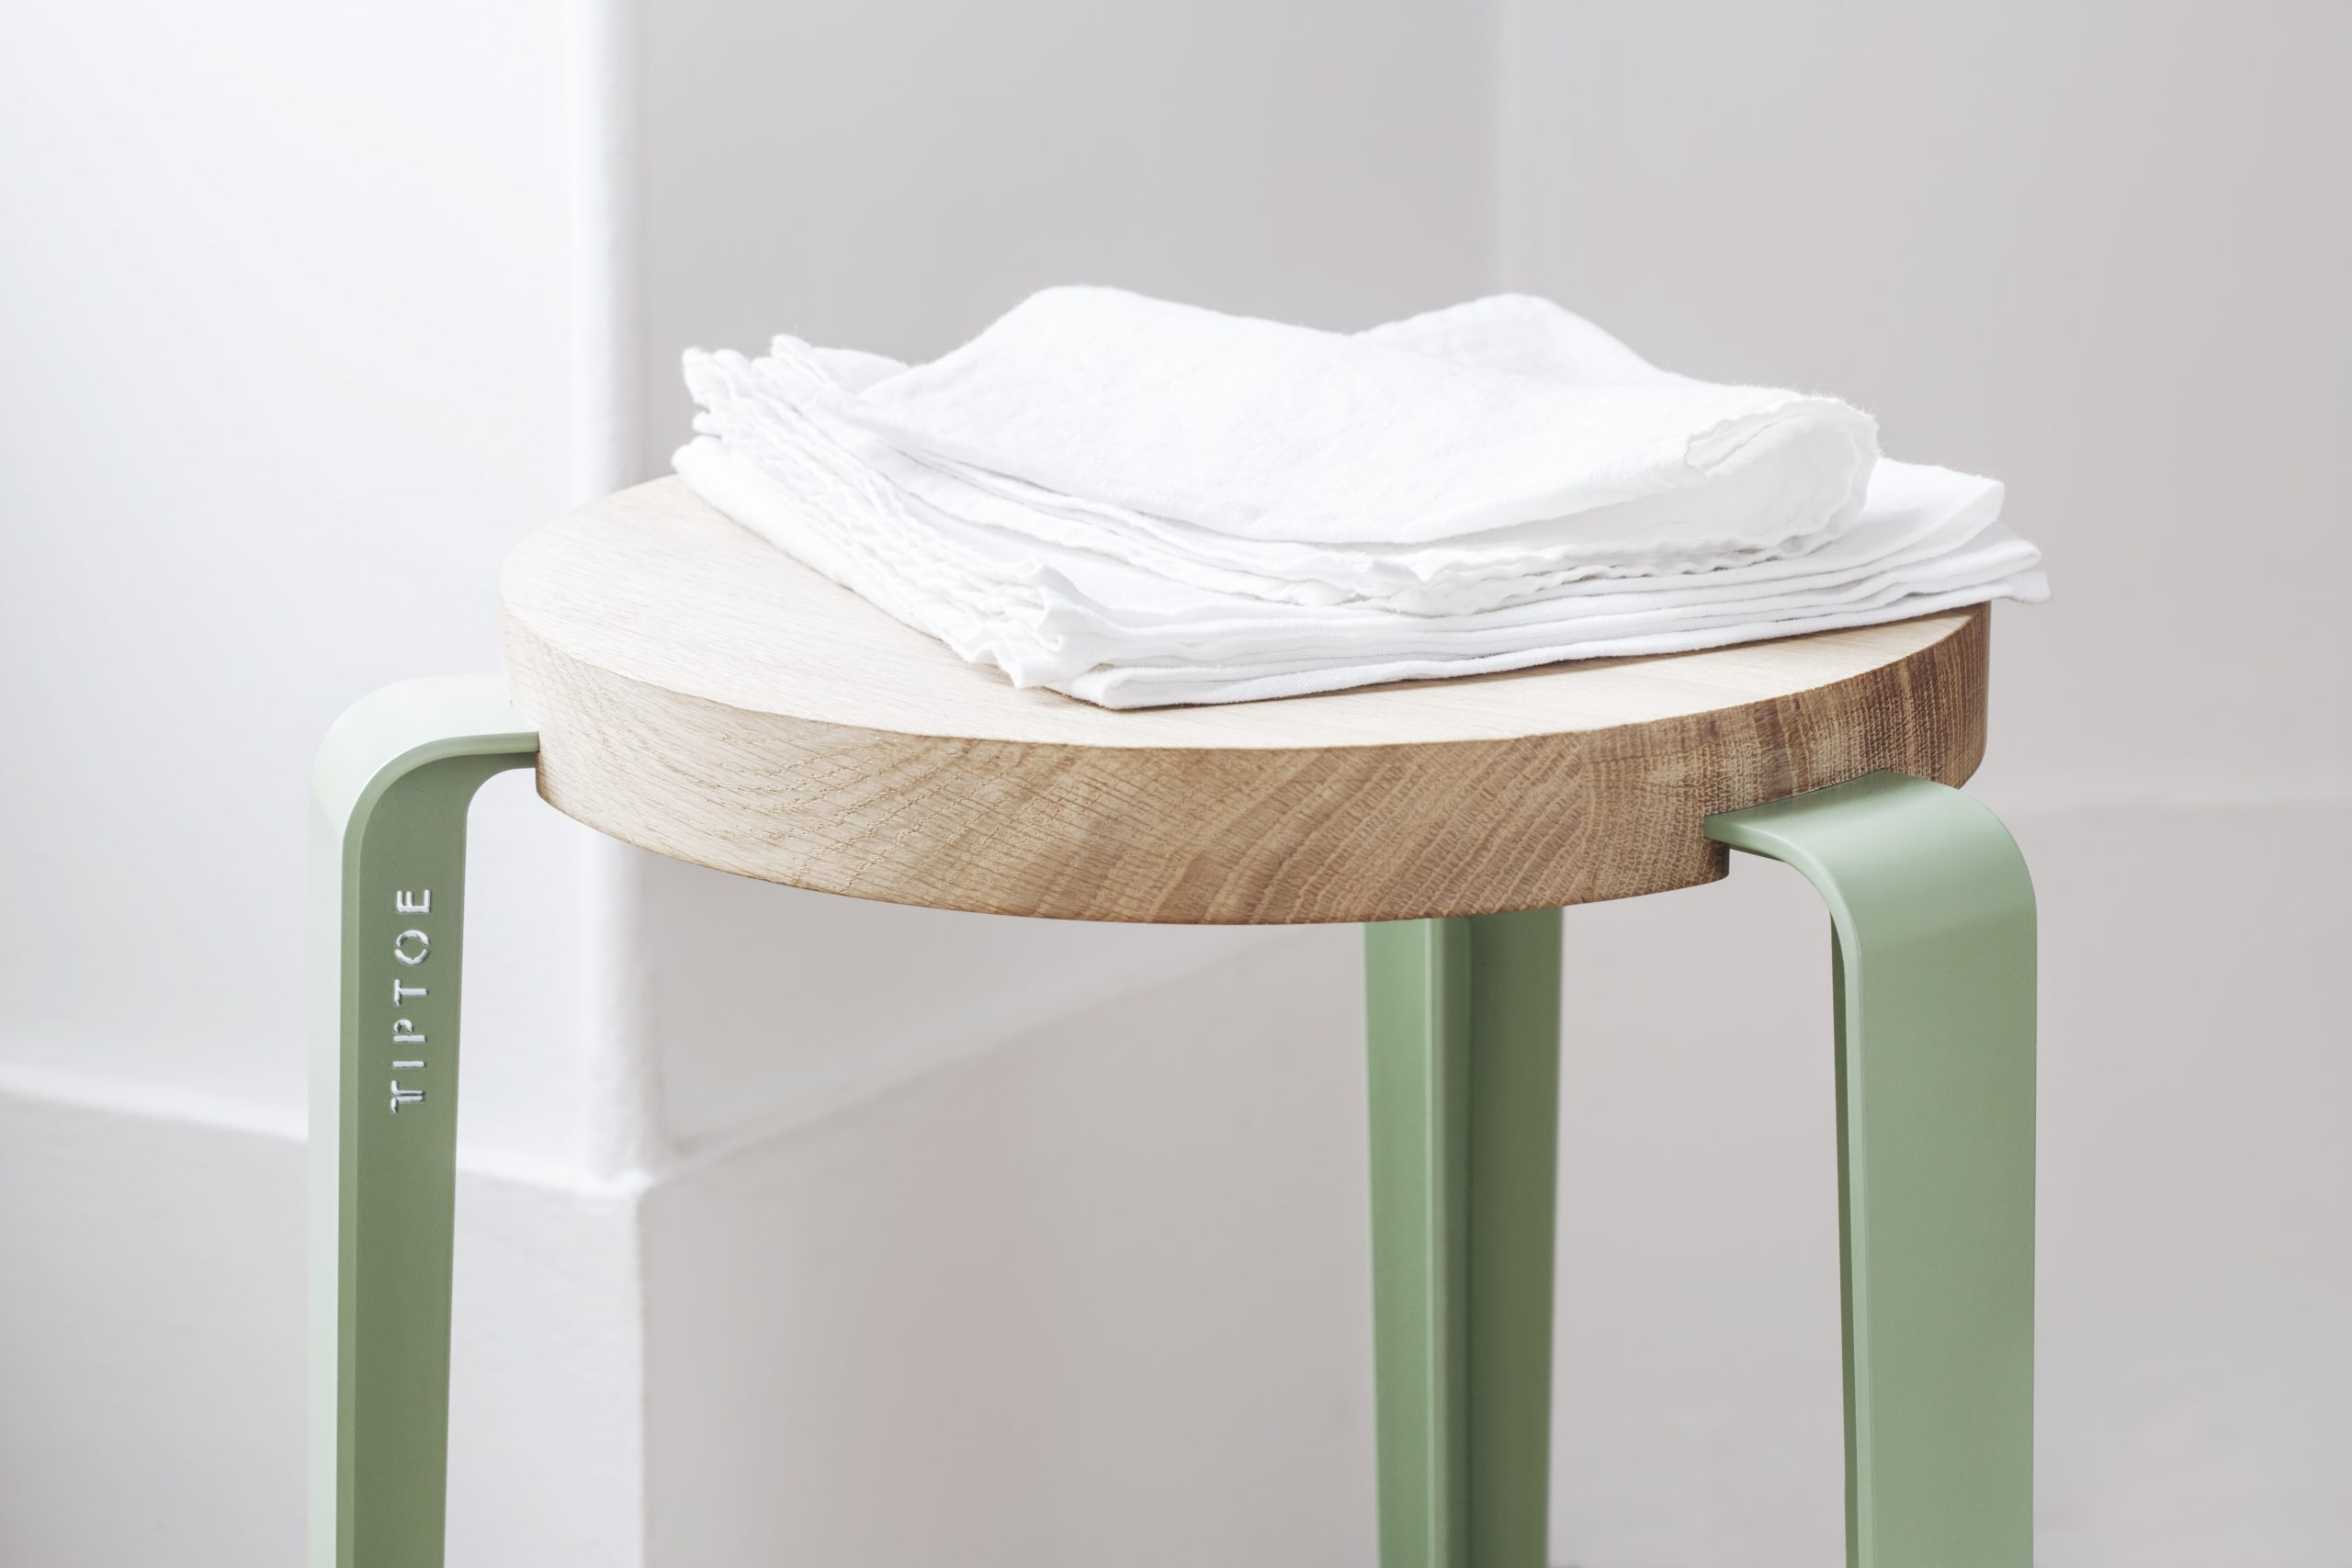 LOU, the versatile stool